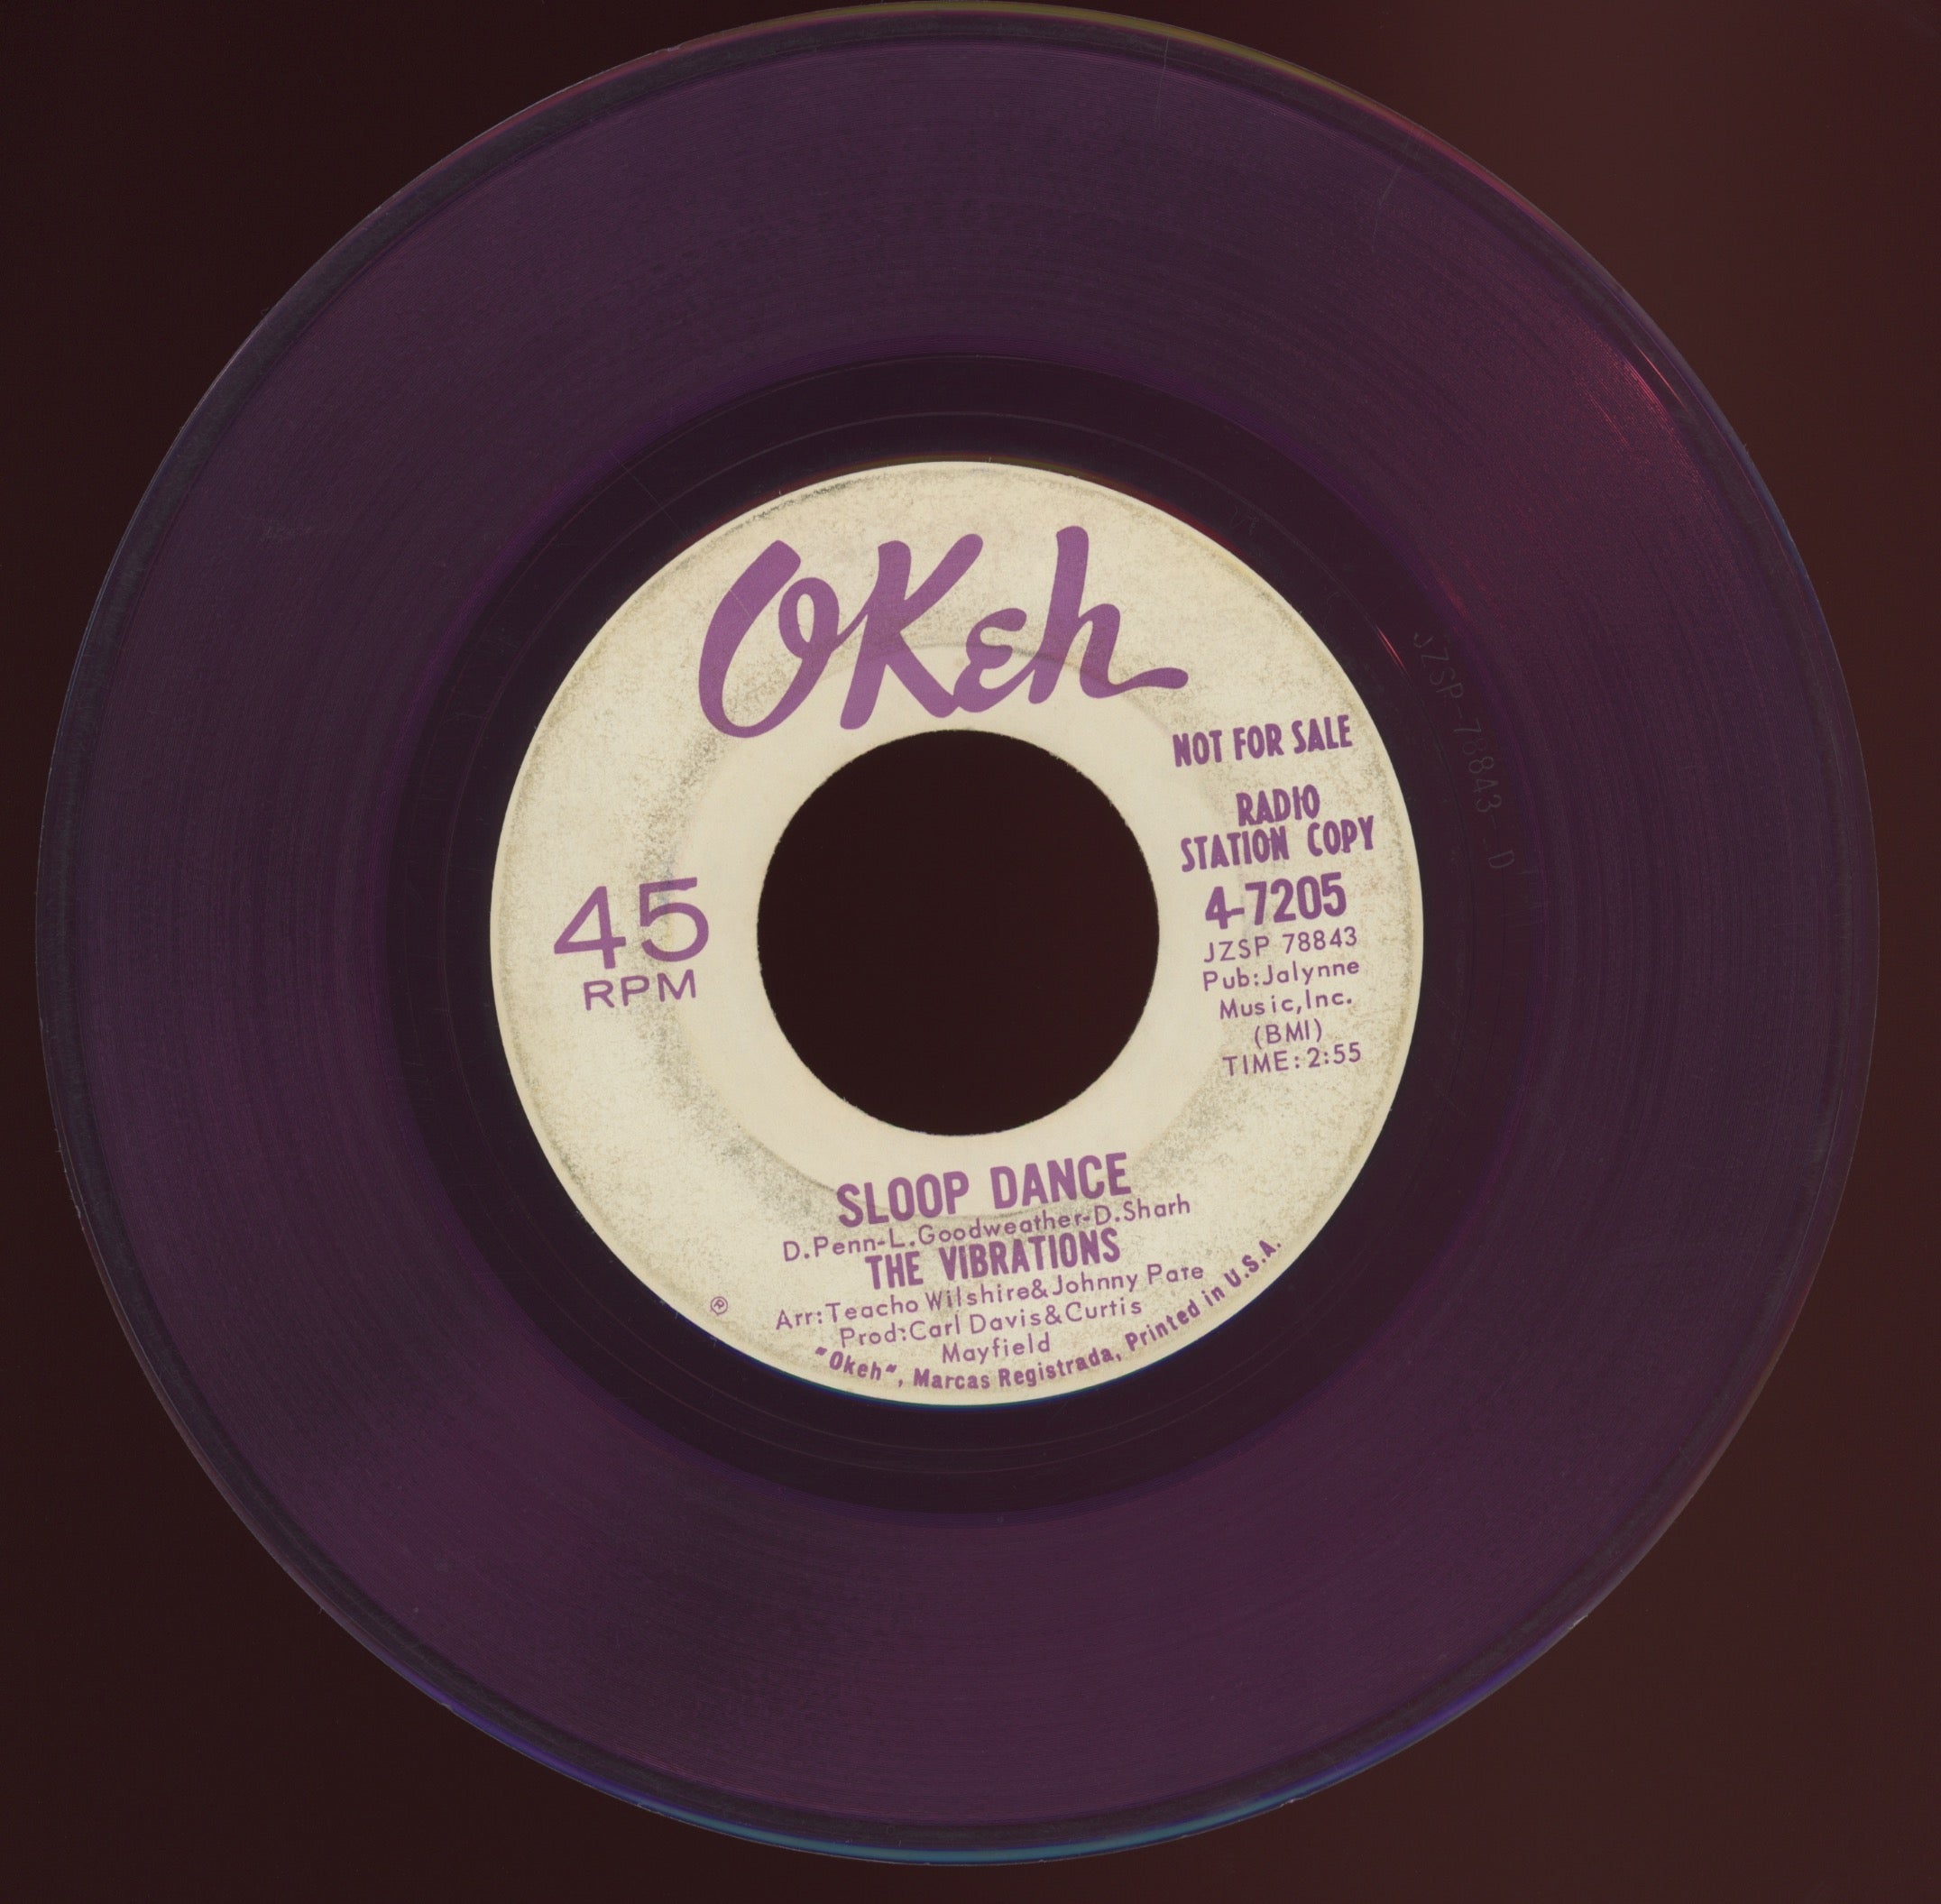 Walter Jackson / Vibrations- It's All Over / Sloop Dance on Okeh Purple Vinyl Promo